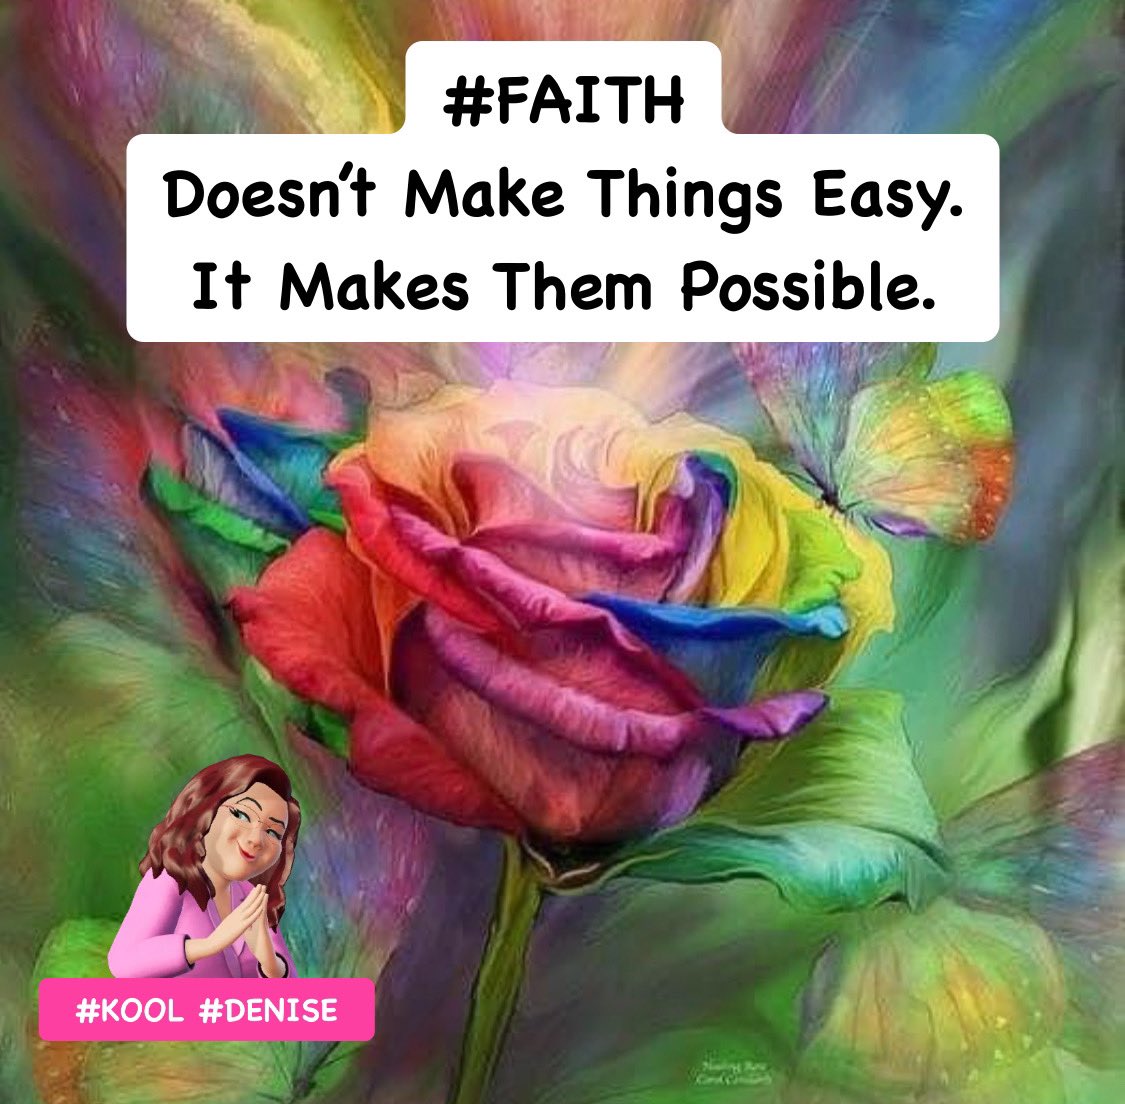 #FAITH 
Doesn’t Make Things Easy. 
It Makes Them Possible. 

#FaithInAction
#FaithJourney
#FaithBased
#FaithWalk
#Faithful
#Faithfulness
#FaithfulLiving

#Friday
#FridayVibes
#FridayThoughts
#FridayMotivation

#KOOL #DENISE
@KOOL_DENISE